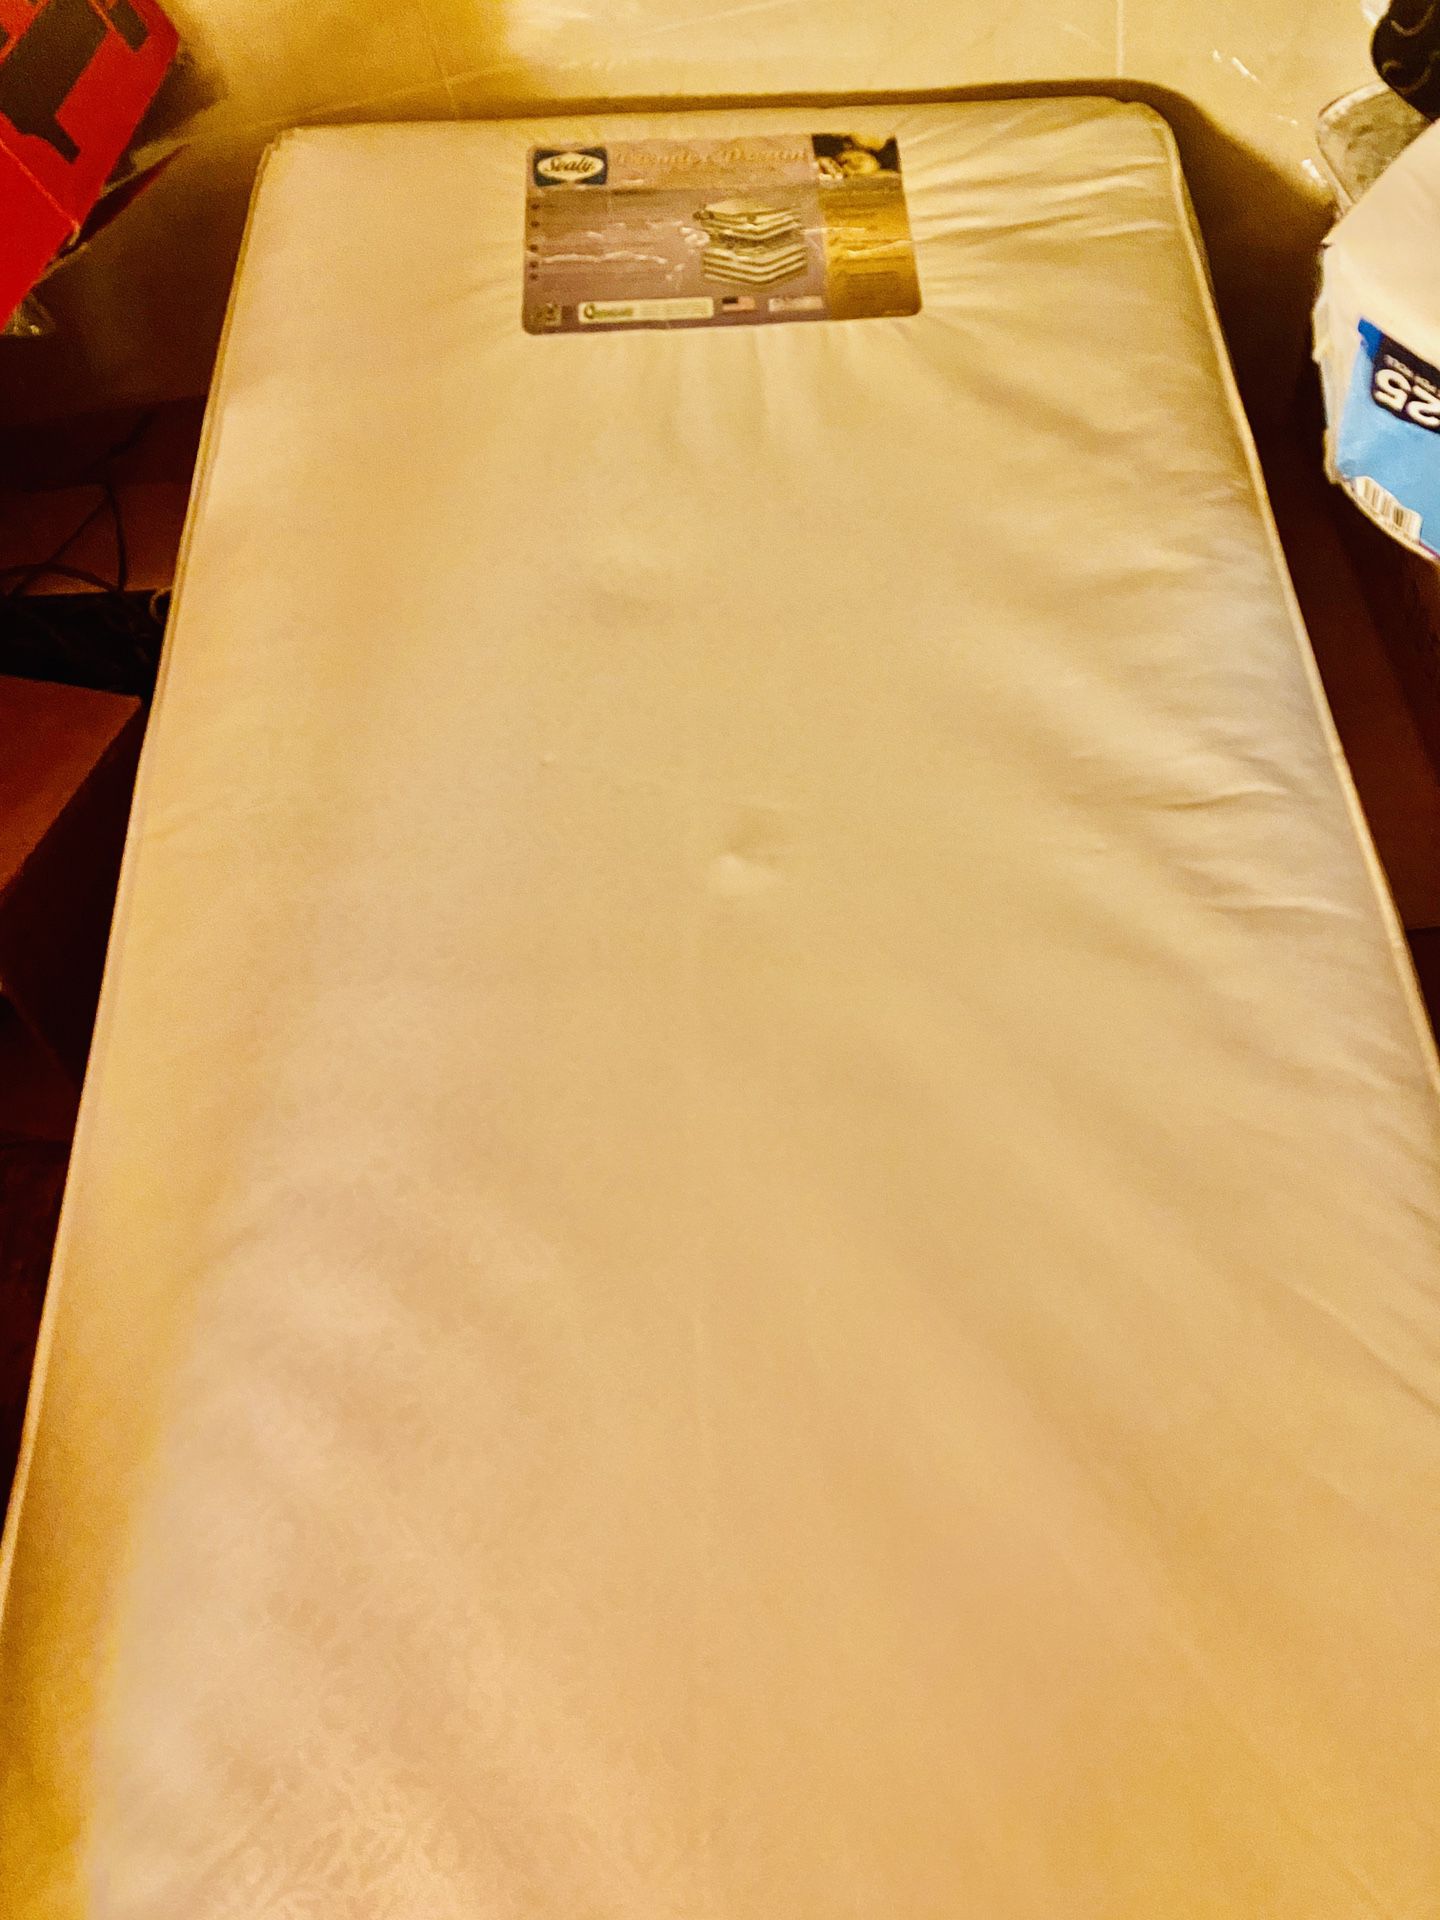 Baby mattress ( Sealy brand)